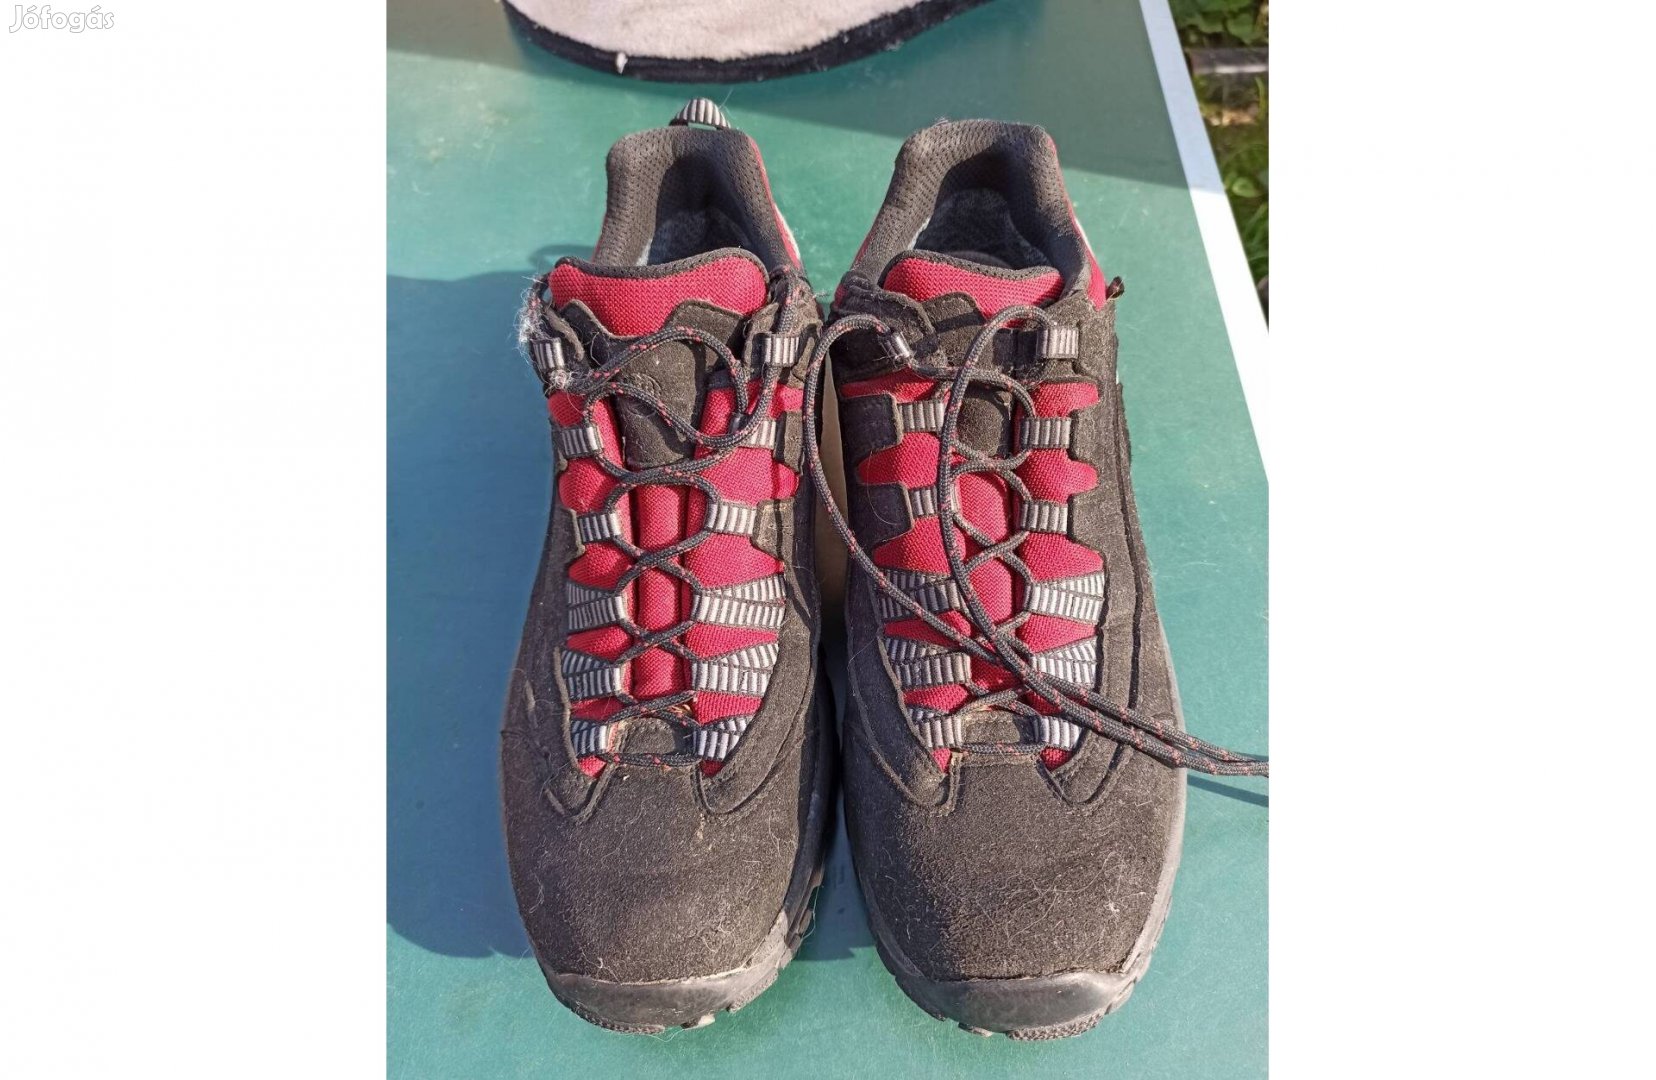 Hanwag cipő félcipő túracipő gore-tex 48